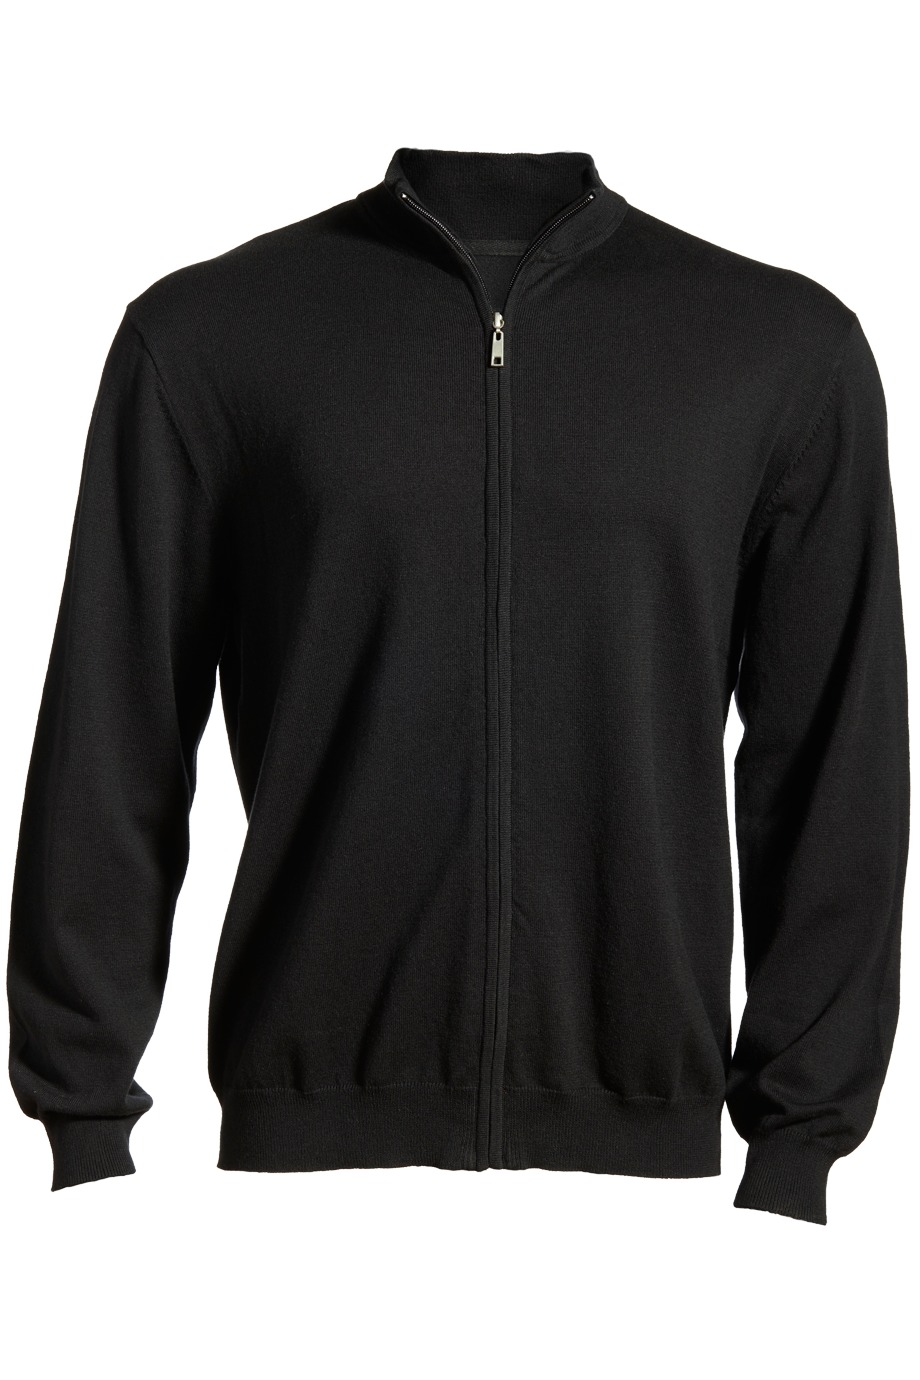 Edwards Garment 4073 - Full Zip Sweater